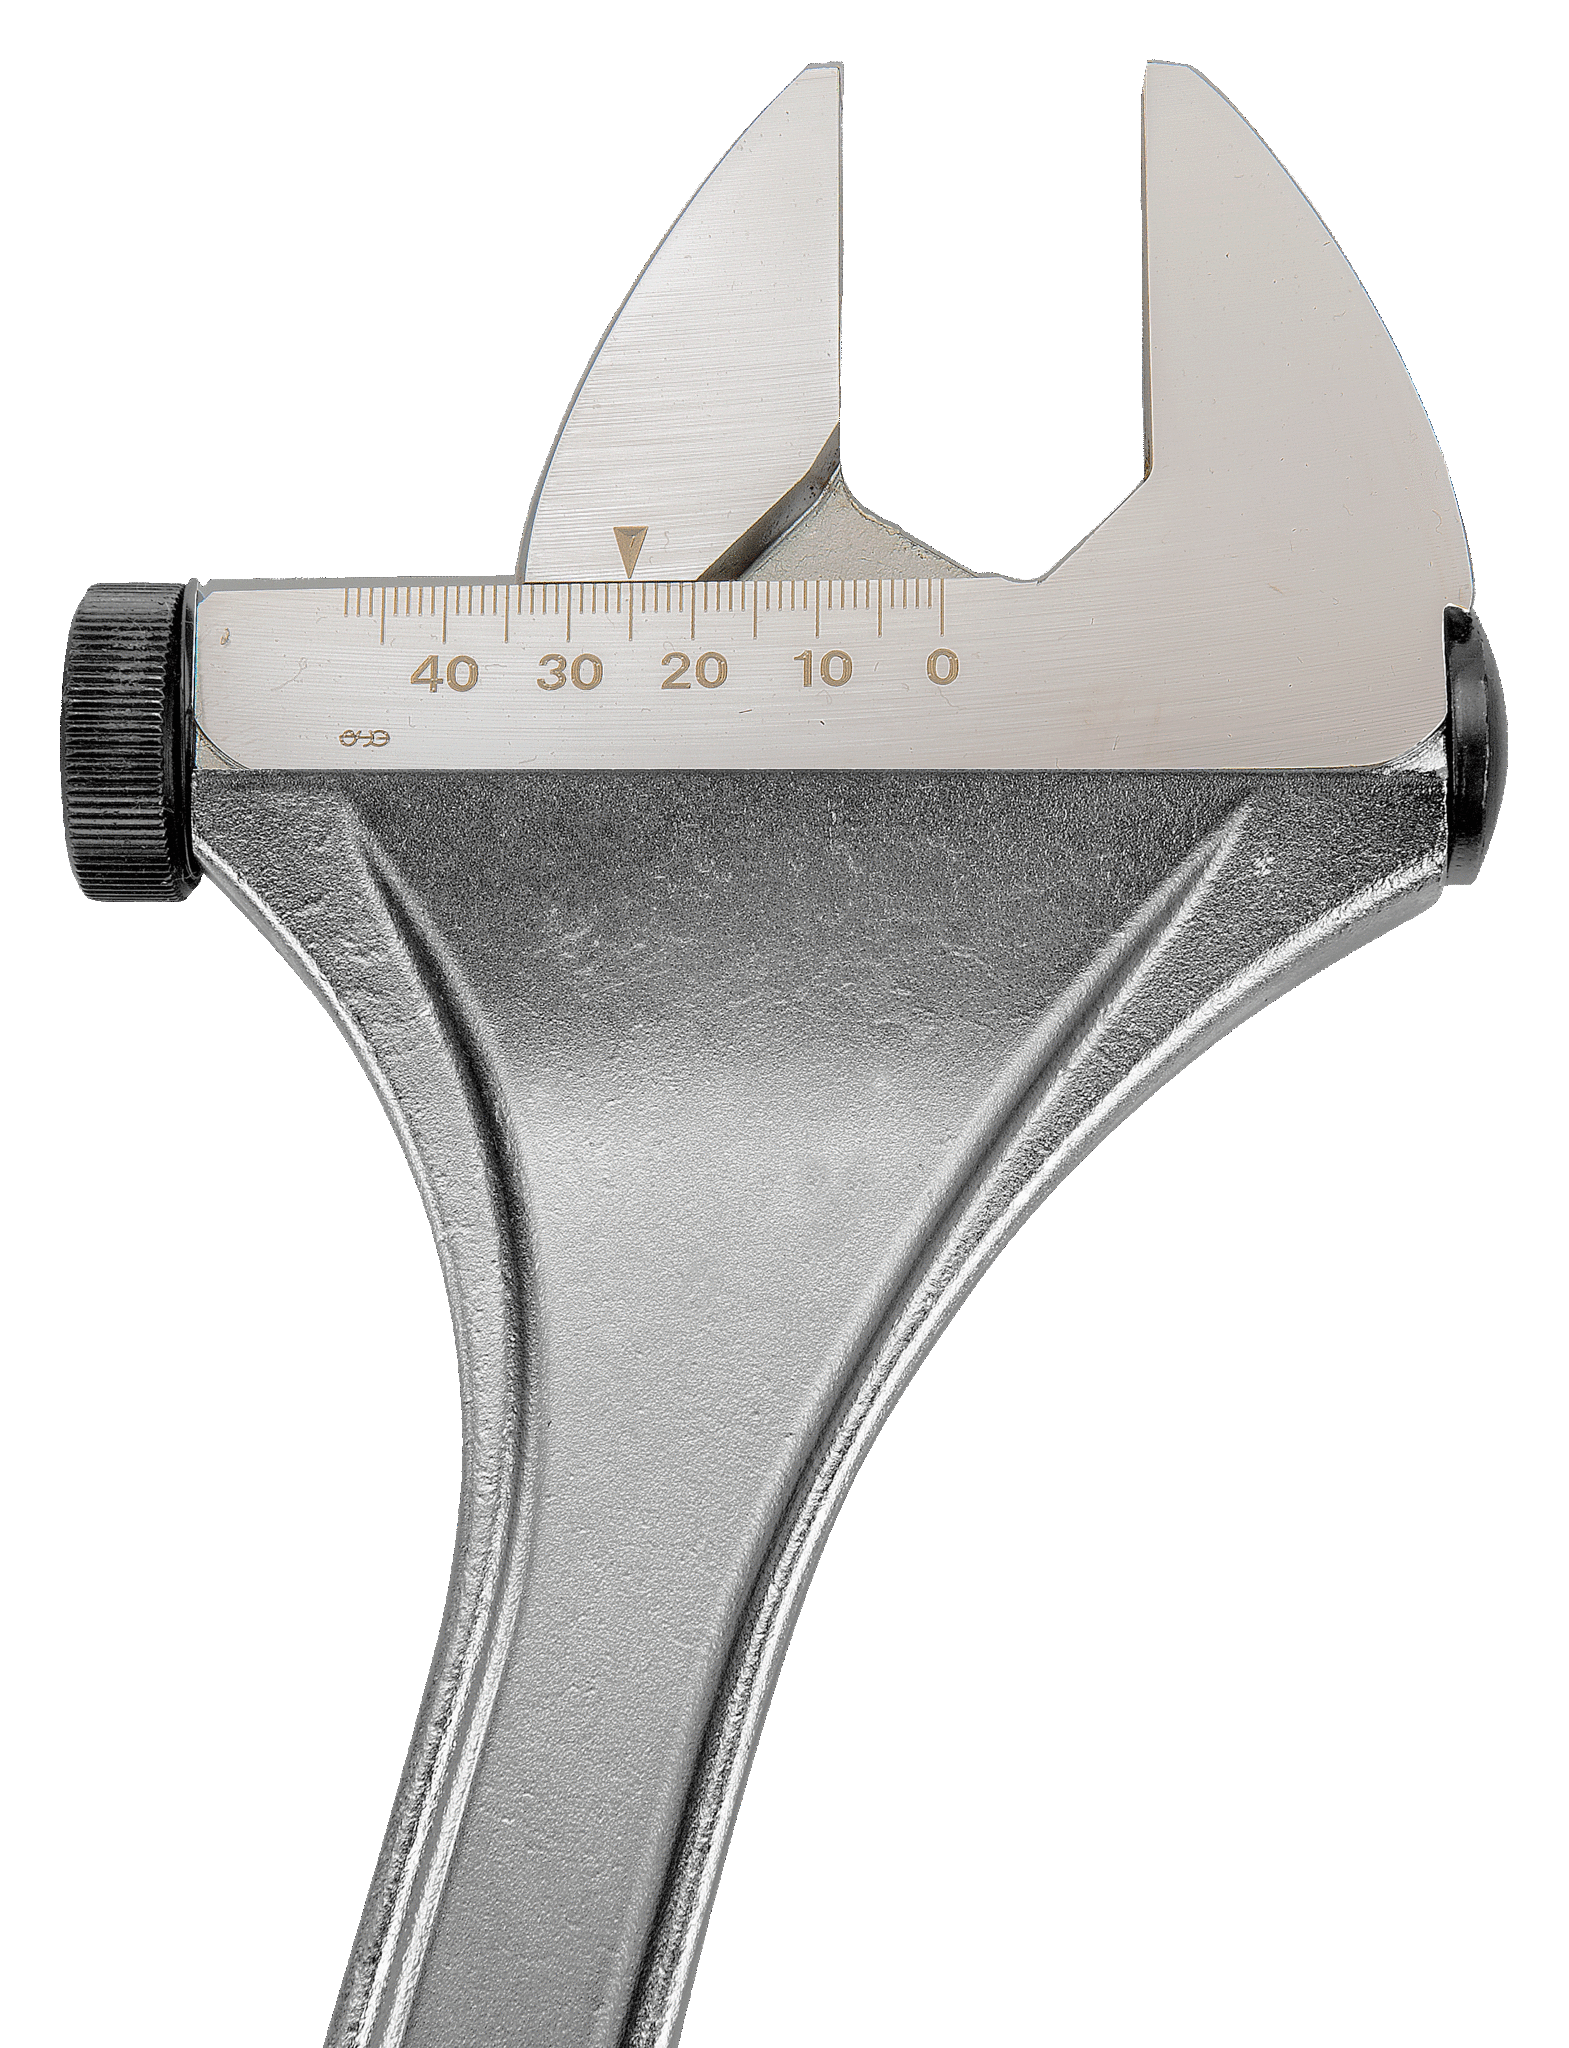 картинка Разводной ключ с регулировкой зева с торца BAHCO 91C от магазина "Элит-инструмент"